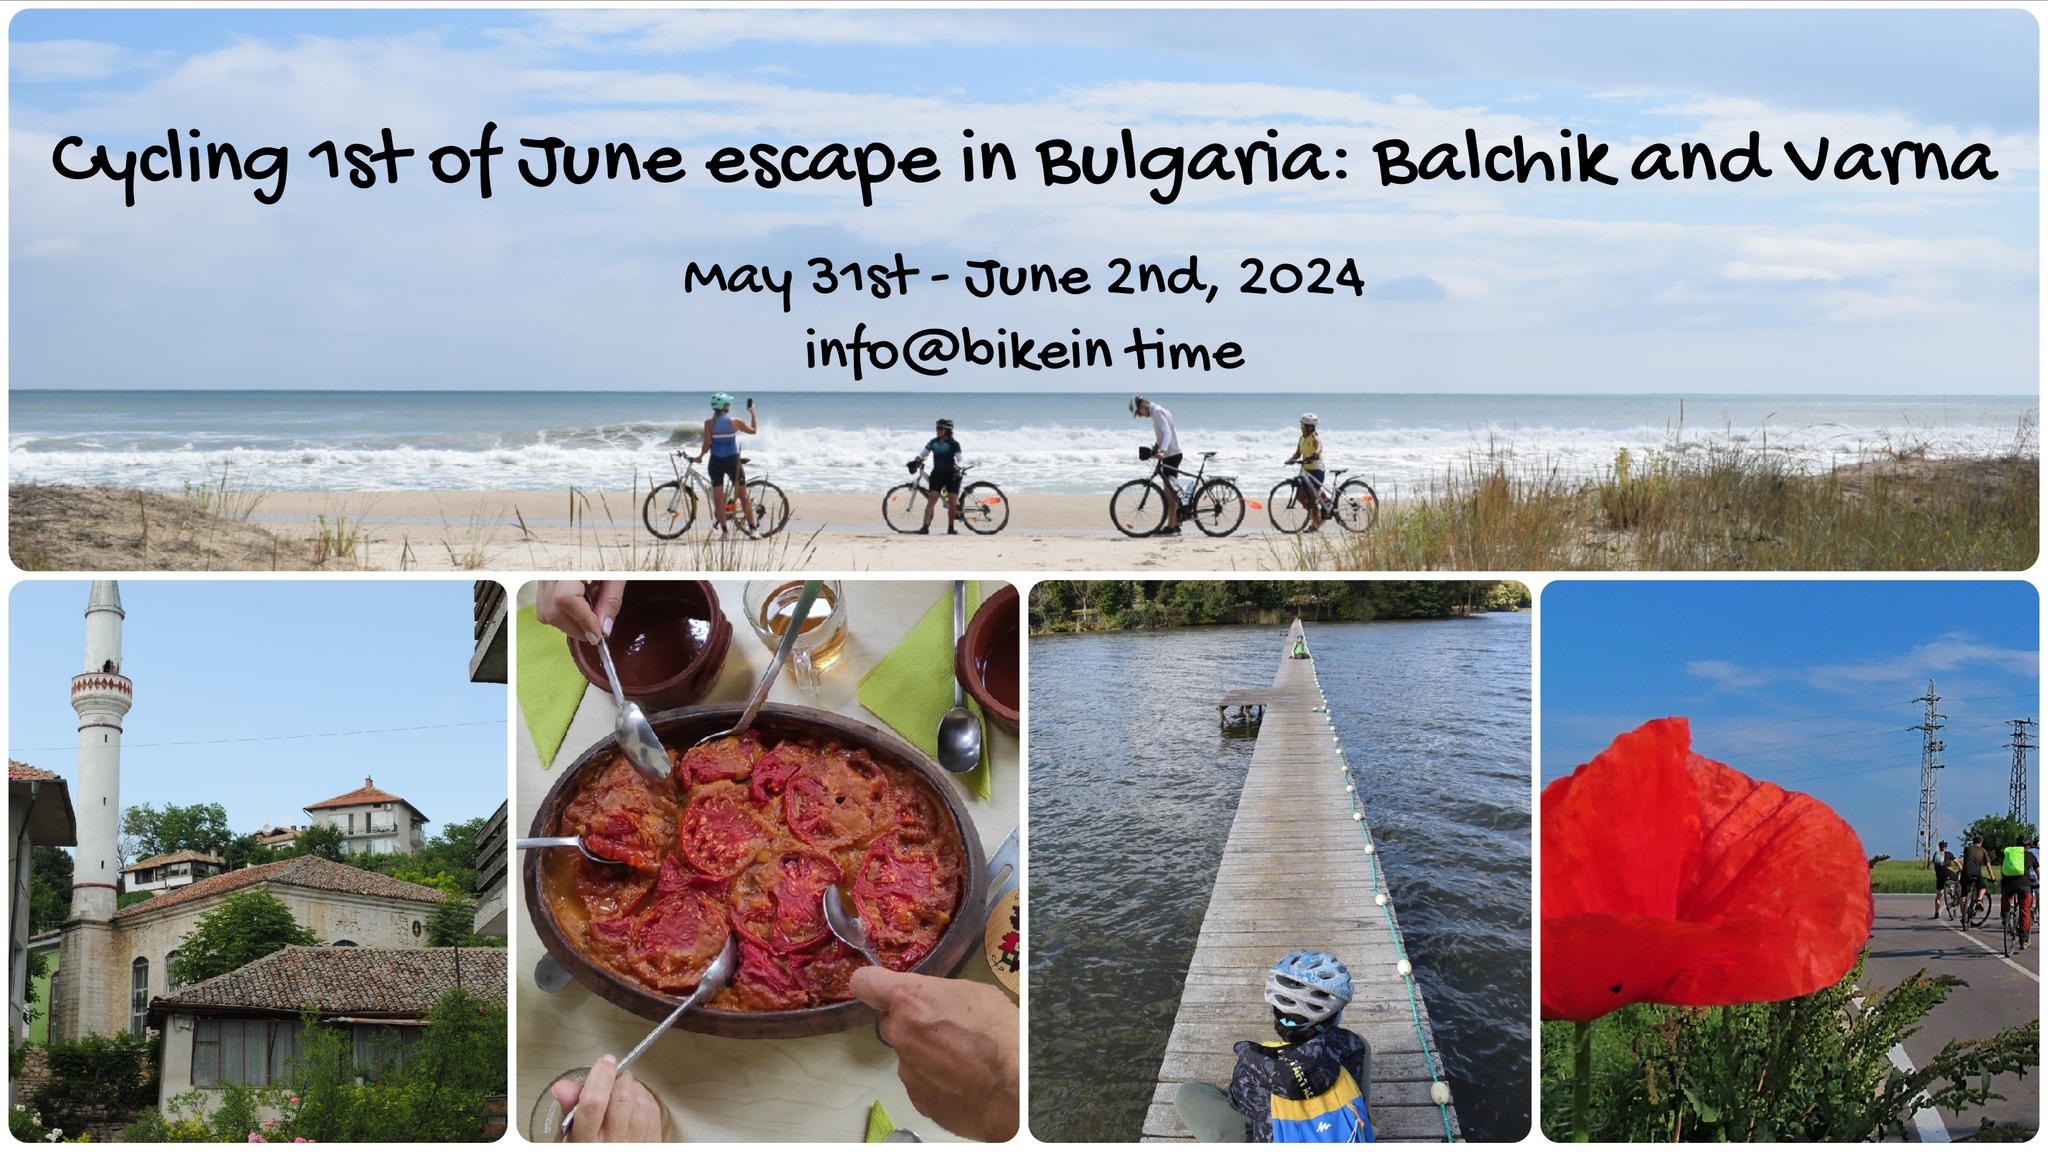 Cycling escape in Bulgaria: Balchik, Varna, Wineries & Black Sea (Bulgaria)